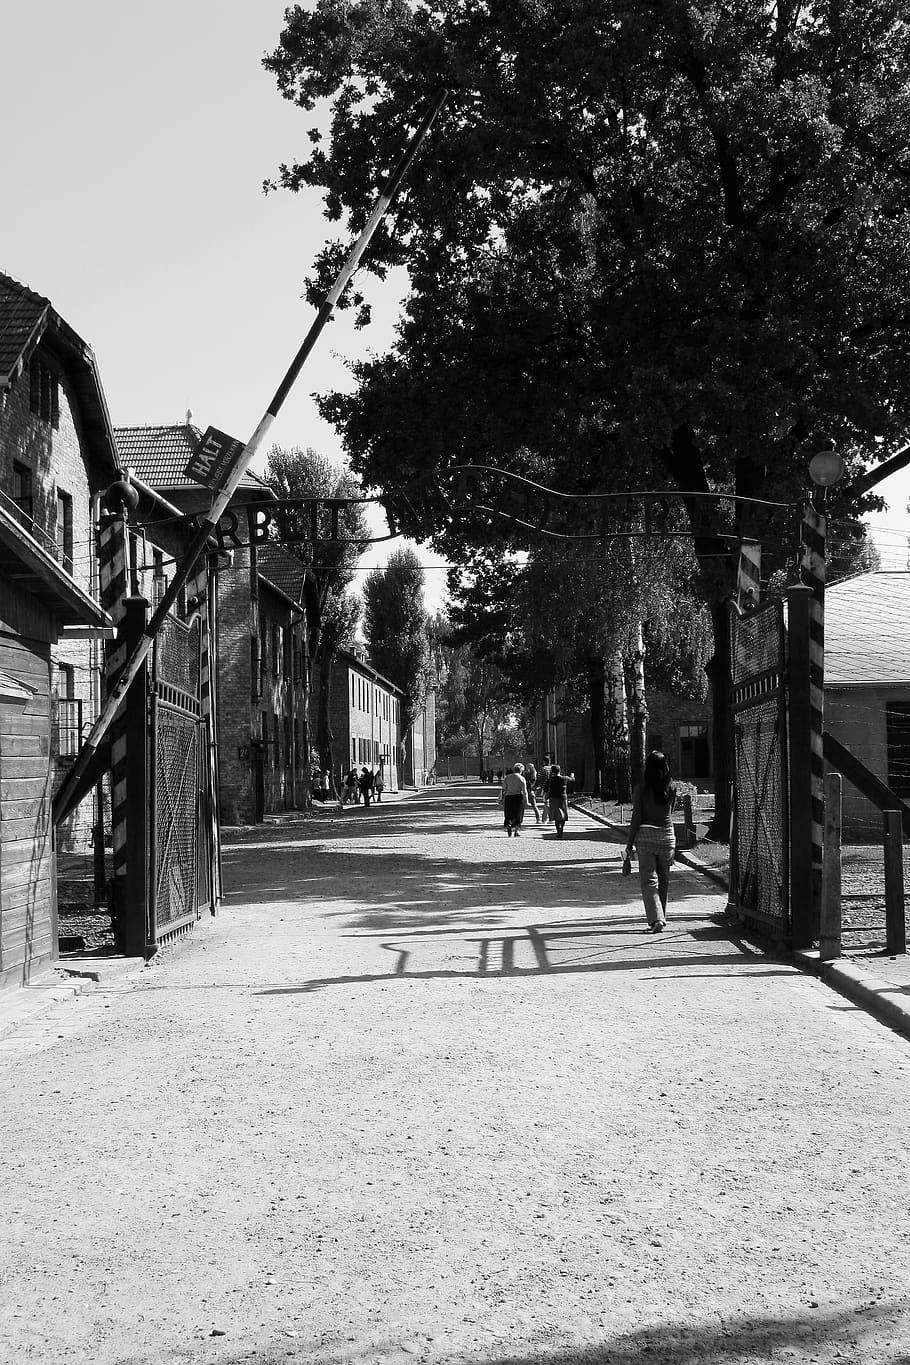 auschwitz, entry gate, barrier, oswiecim, barracks, holocaust, poland, tree, plant, architecture